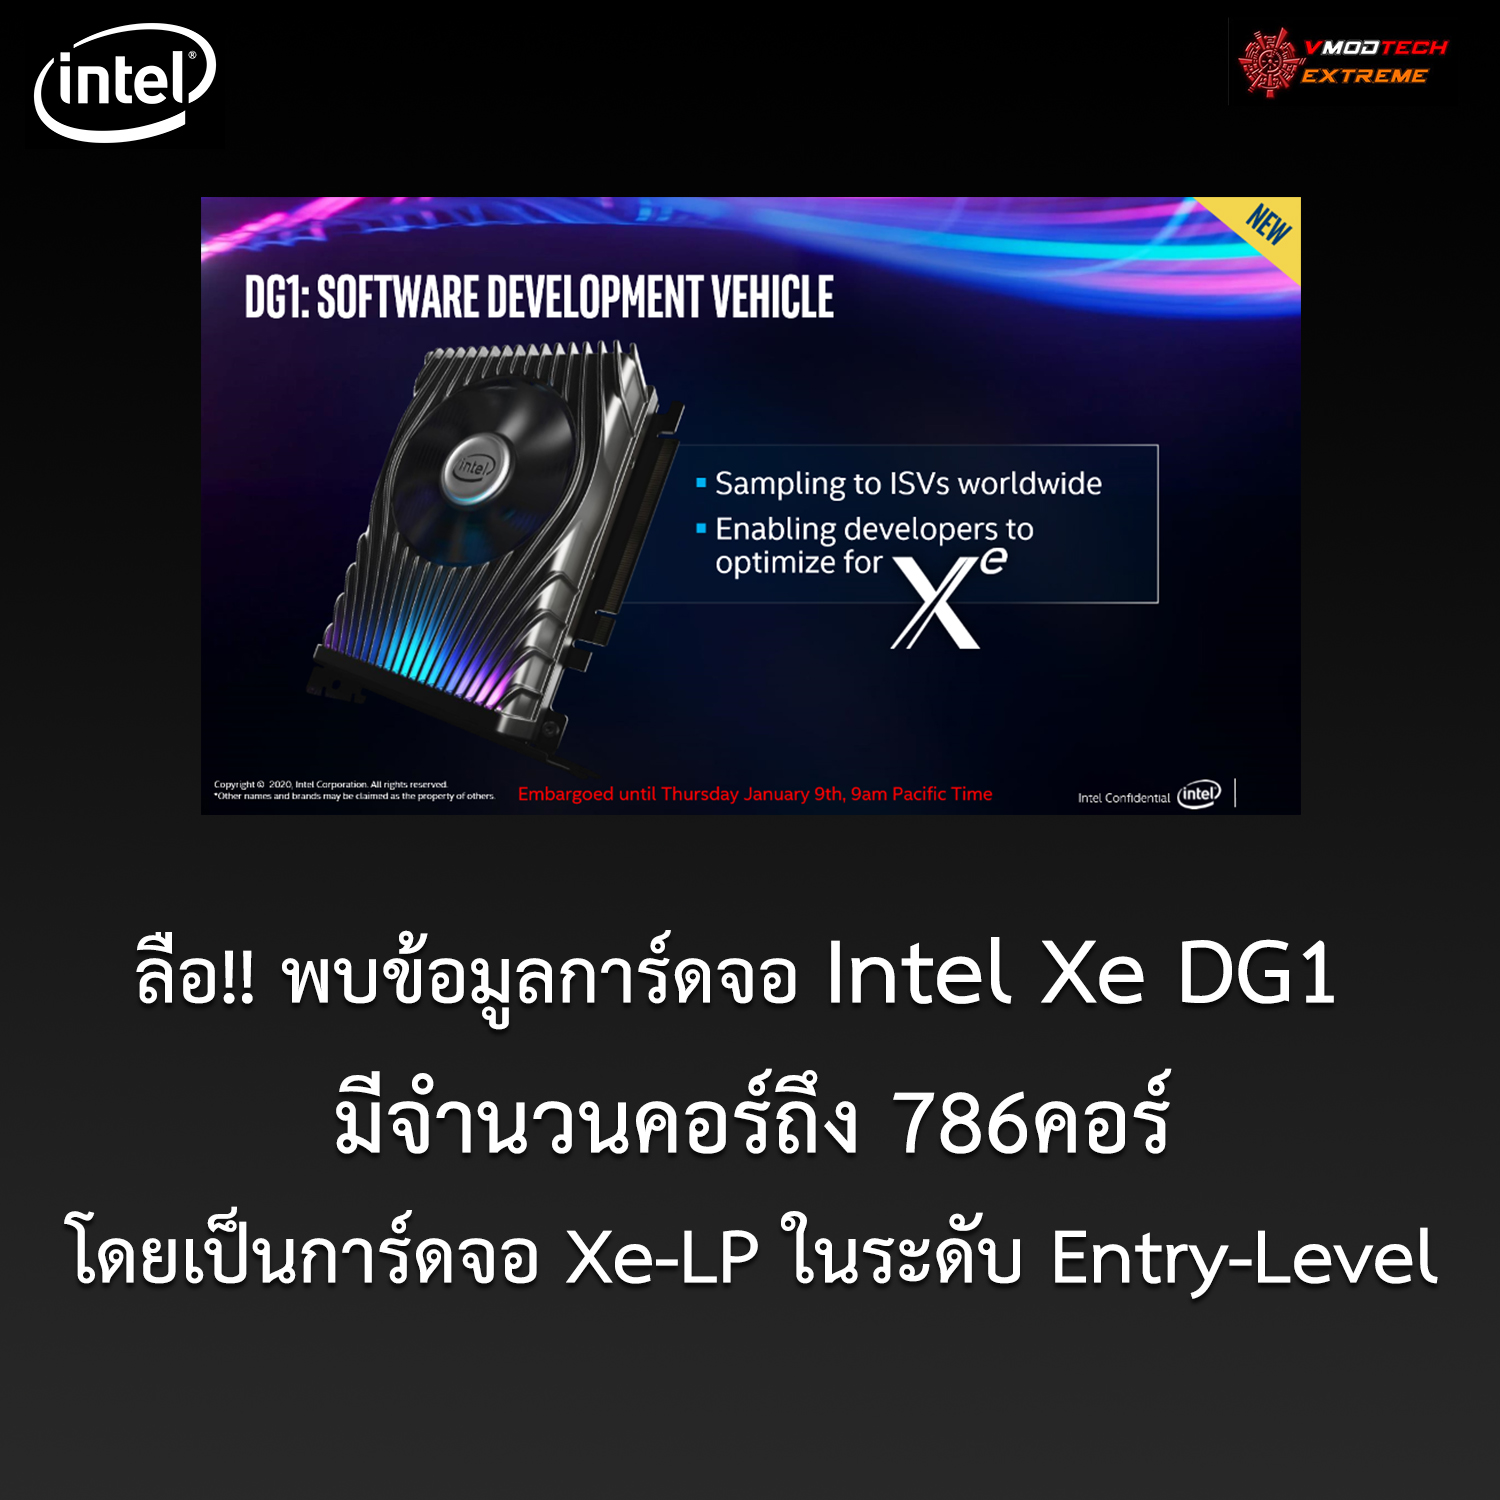 intel xe dg1 พบข้อมูลการ์ดจอ Intel Xe DG1 มีจำนวนคอร์ถึง 786คอร์โดยเป็นการ์ดจอ Xe LP ในระดับ Entry Level